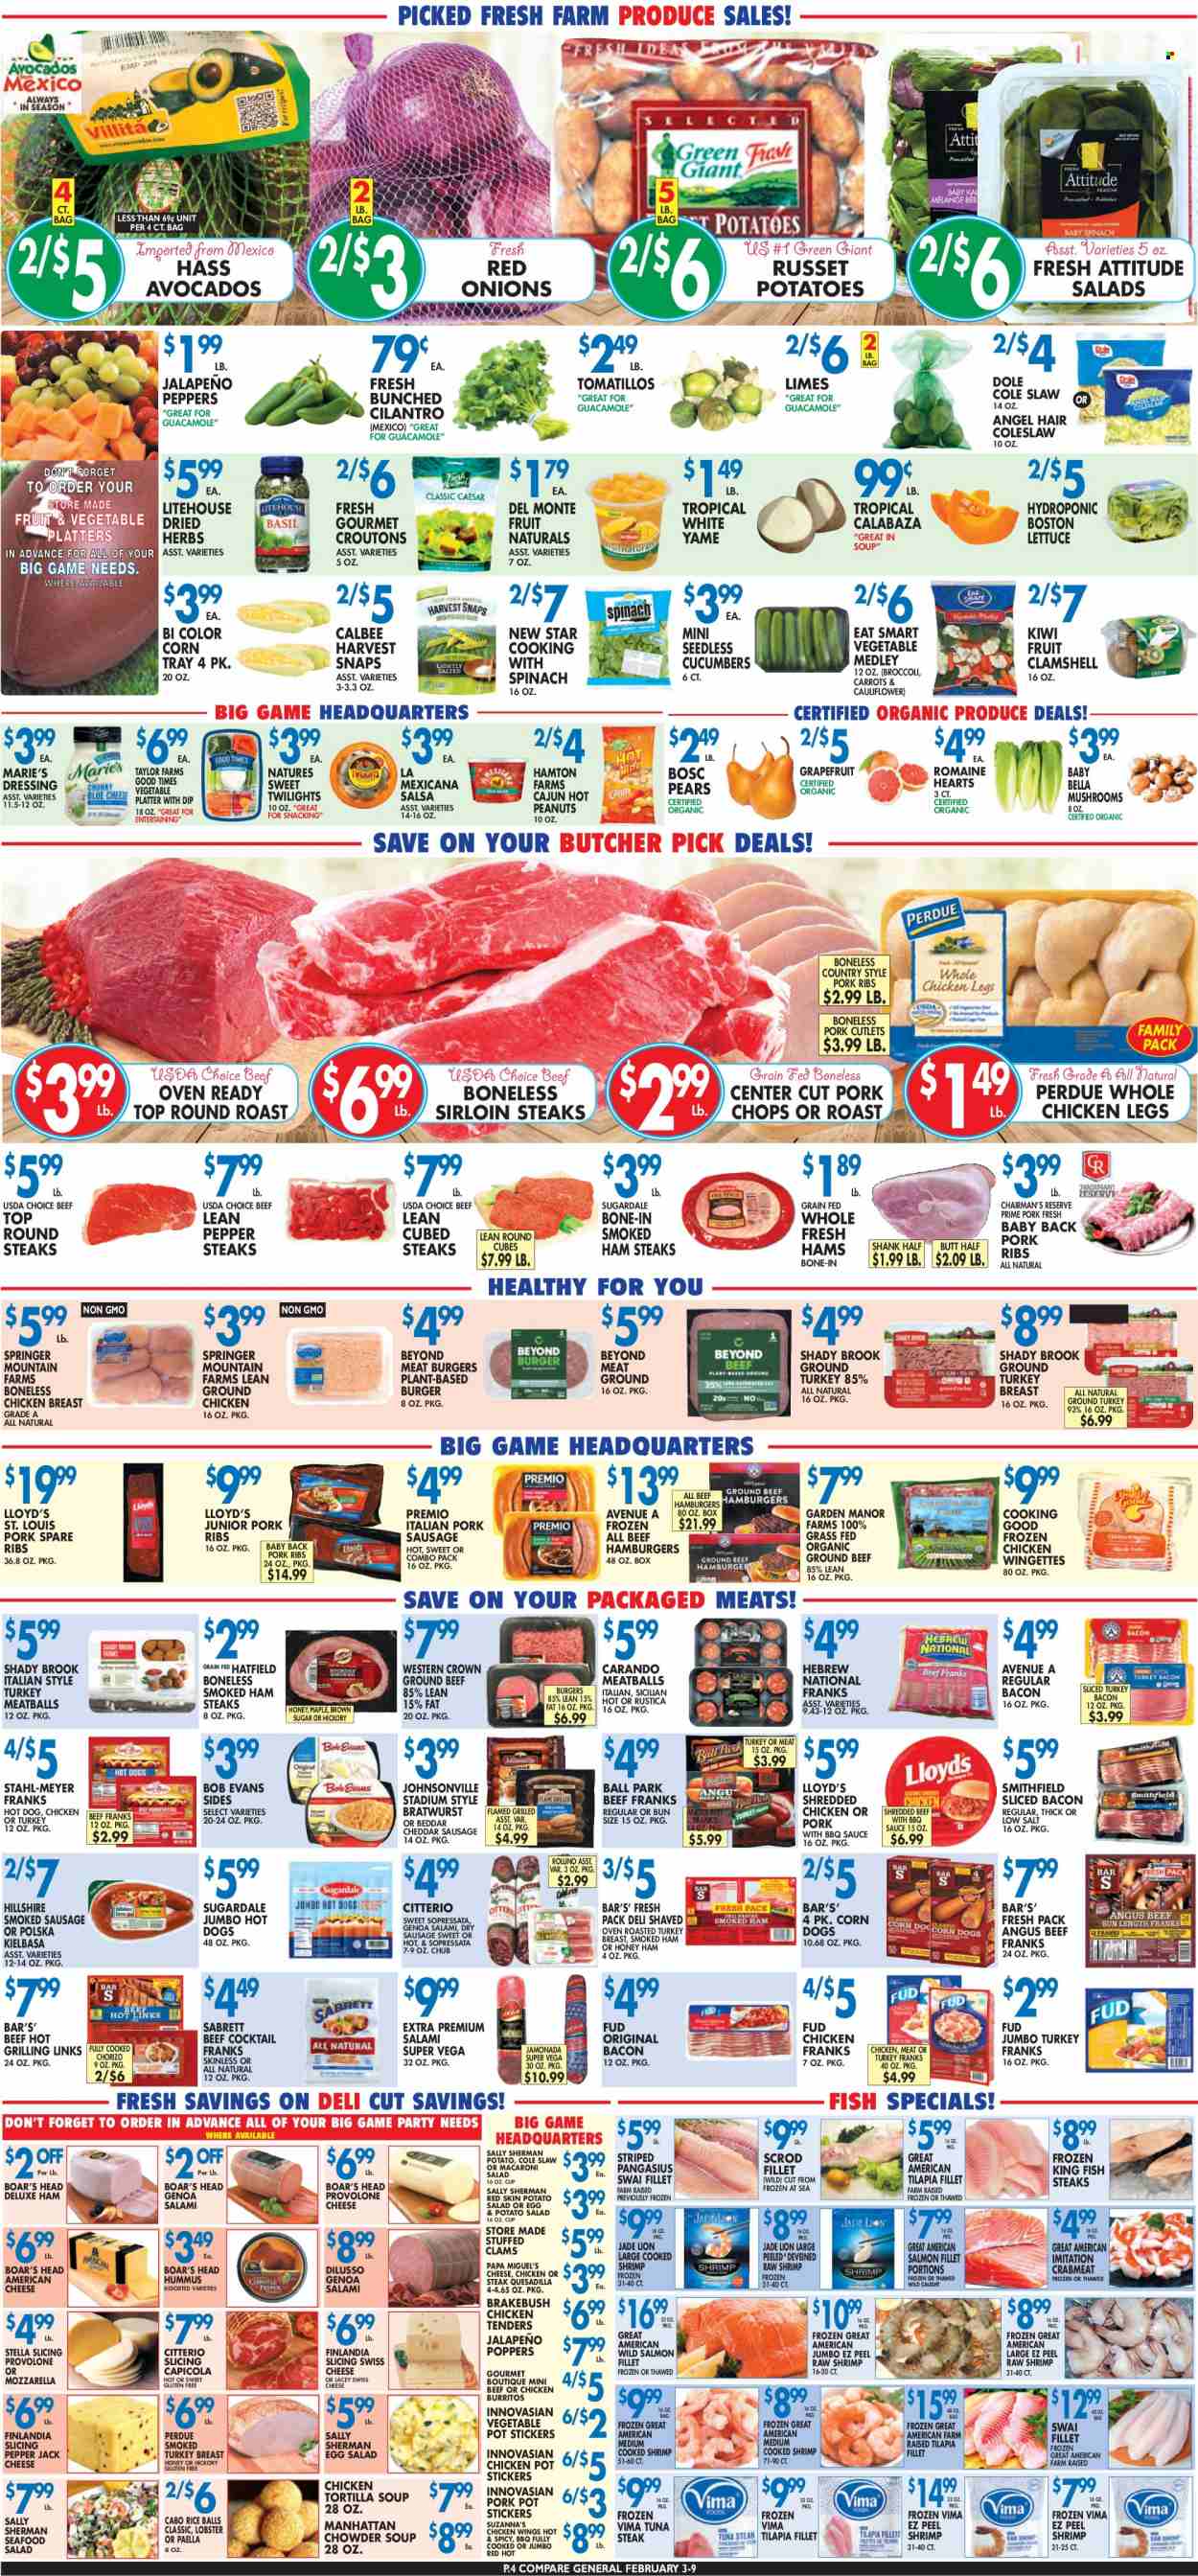 thumbnail - Compare Foods Flyer - 02/03/2023 - 02/09/2023 - Sales products - mushrooms, tortillas, broccoli, carrots, cucumber, red onions, russet potatoes, tomatillo, potatoes, Dole, jalapeño, grapefruits, kiwi, limes, pears, clams, crab meat, lobster, salmon, salmon fillet, tilapia, tuna, pangasius, seafood, fish, king fish, shrimps, fish steak, swai fillet, coleslaw, hot dog, chicken tenders, meatballs, soup, hamburger, sauce, burrito, Perdue®, Bob Evans, Sugardale, bacon, salami, sliced turkey, turkey bacon, ham, chorizo, smoked ham, Johnsonville, bratwurst, sausage, smoked sausage, pork sausage, chicken frankfurters, kielbasa, hummus, guacamole, potato salad, macaroni salad, seafood salad, ham steaks, american cheese, swiss cheese, Pepper Jack cheese, Provolone, dip, chicken wings, paella, rice balls, cane sugar, croutons, Harvest Snaps, tuna steak, Del Monte, cilantro, herbs, BBQ sauce, dressing, salsa, peanuts, ground chicken, ground turkey, whole chicken, chicken breasts, chicken legs, beef meat, ground beef, steak, round roast, sirloin steak, ribs, pork chops, pork meat, pork ribs, pork spare ribs, pork back ribs, pot. Page 4.